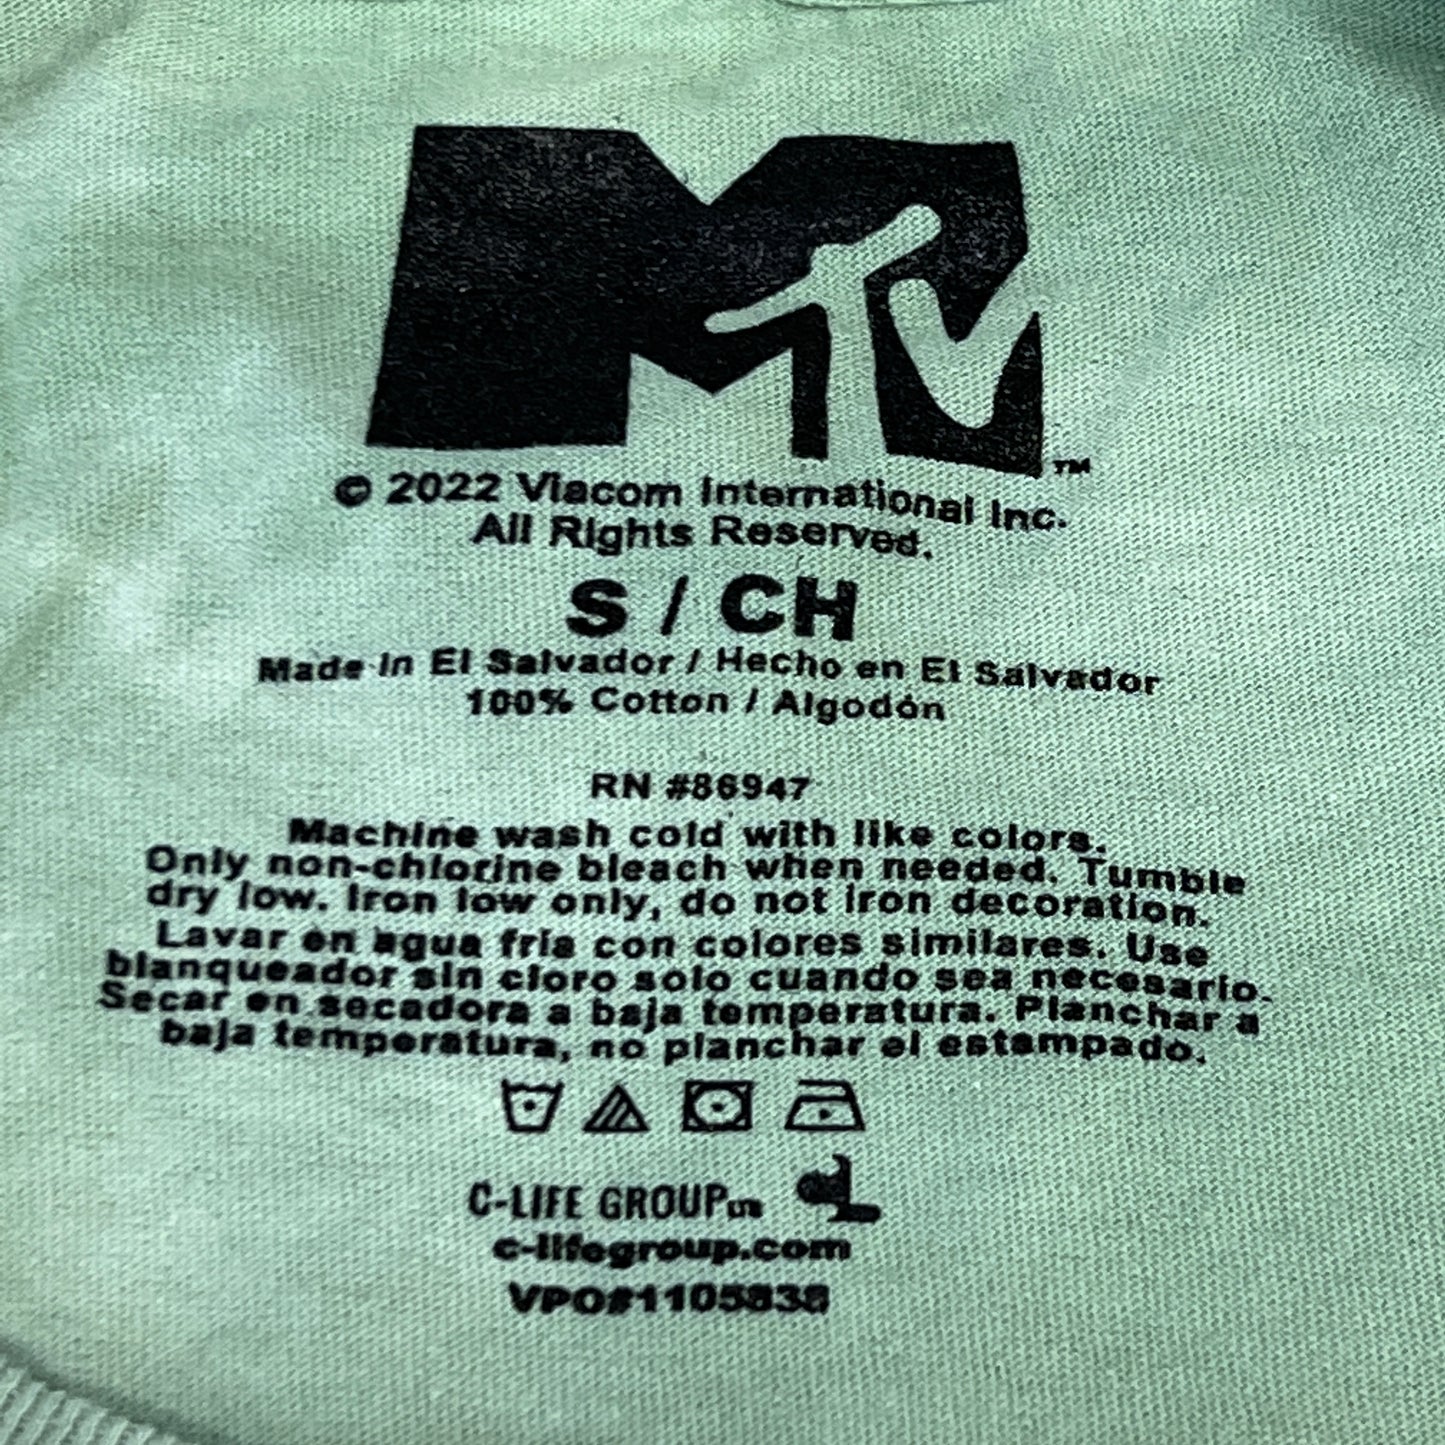 MTV Mint and White Tie-Dye Short Sleeve T-Shirt Women's Sz S 86947(New)